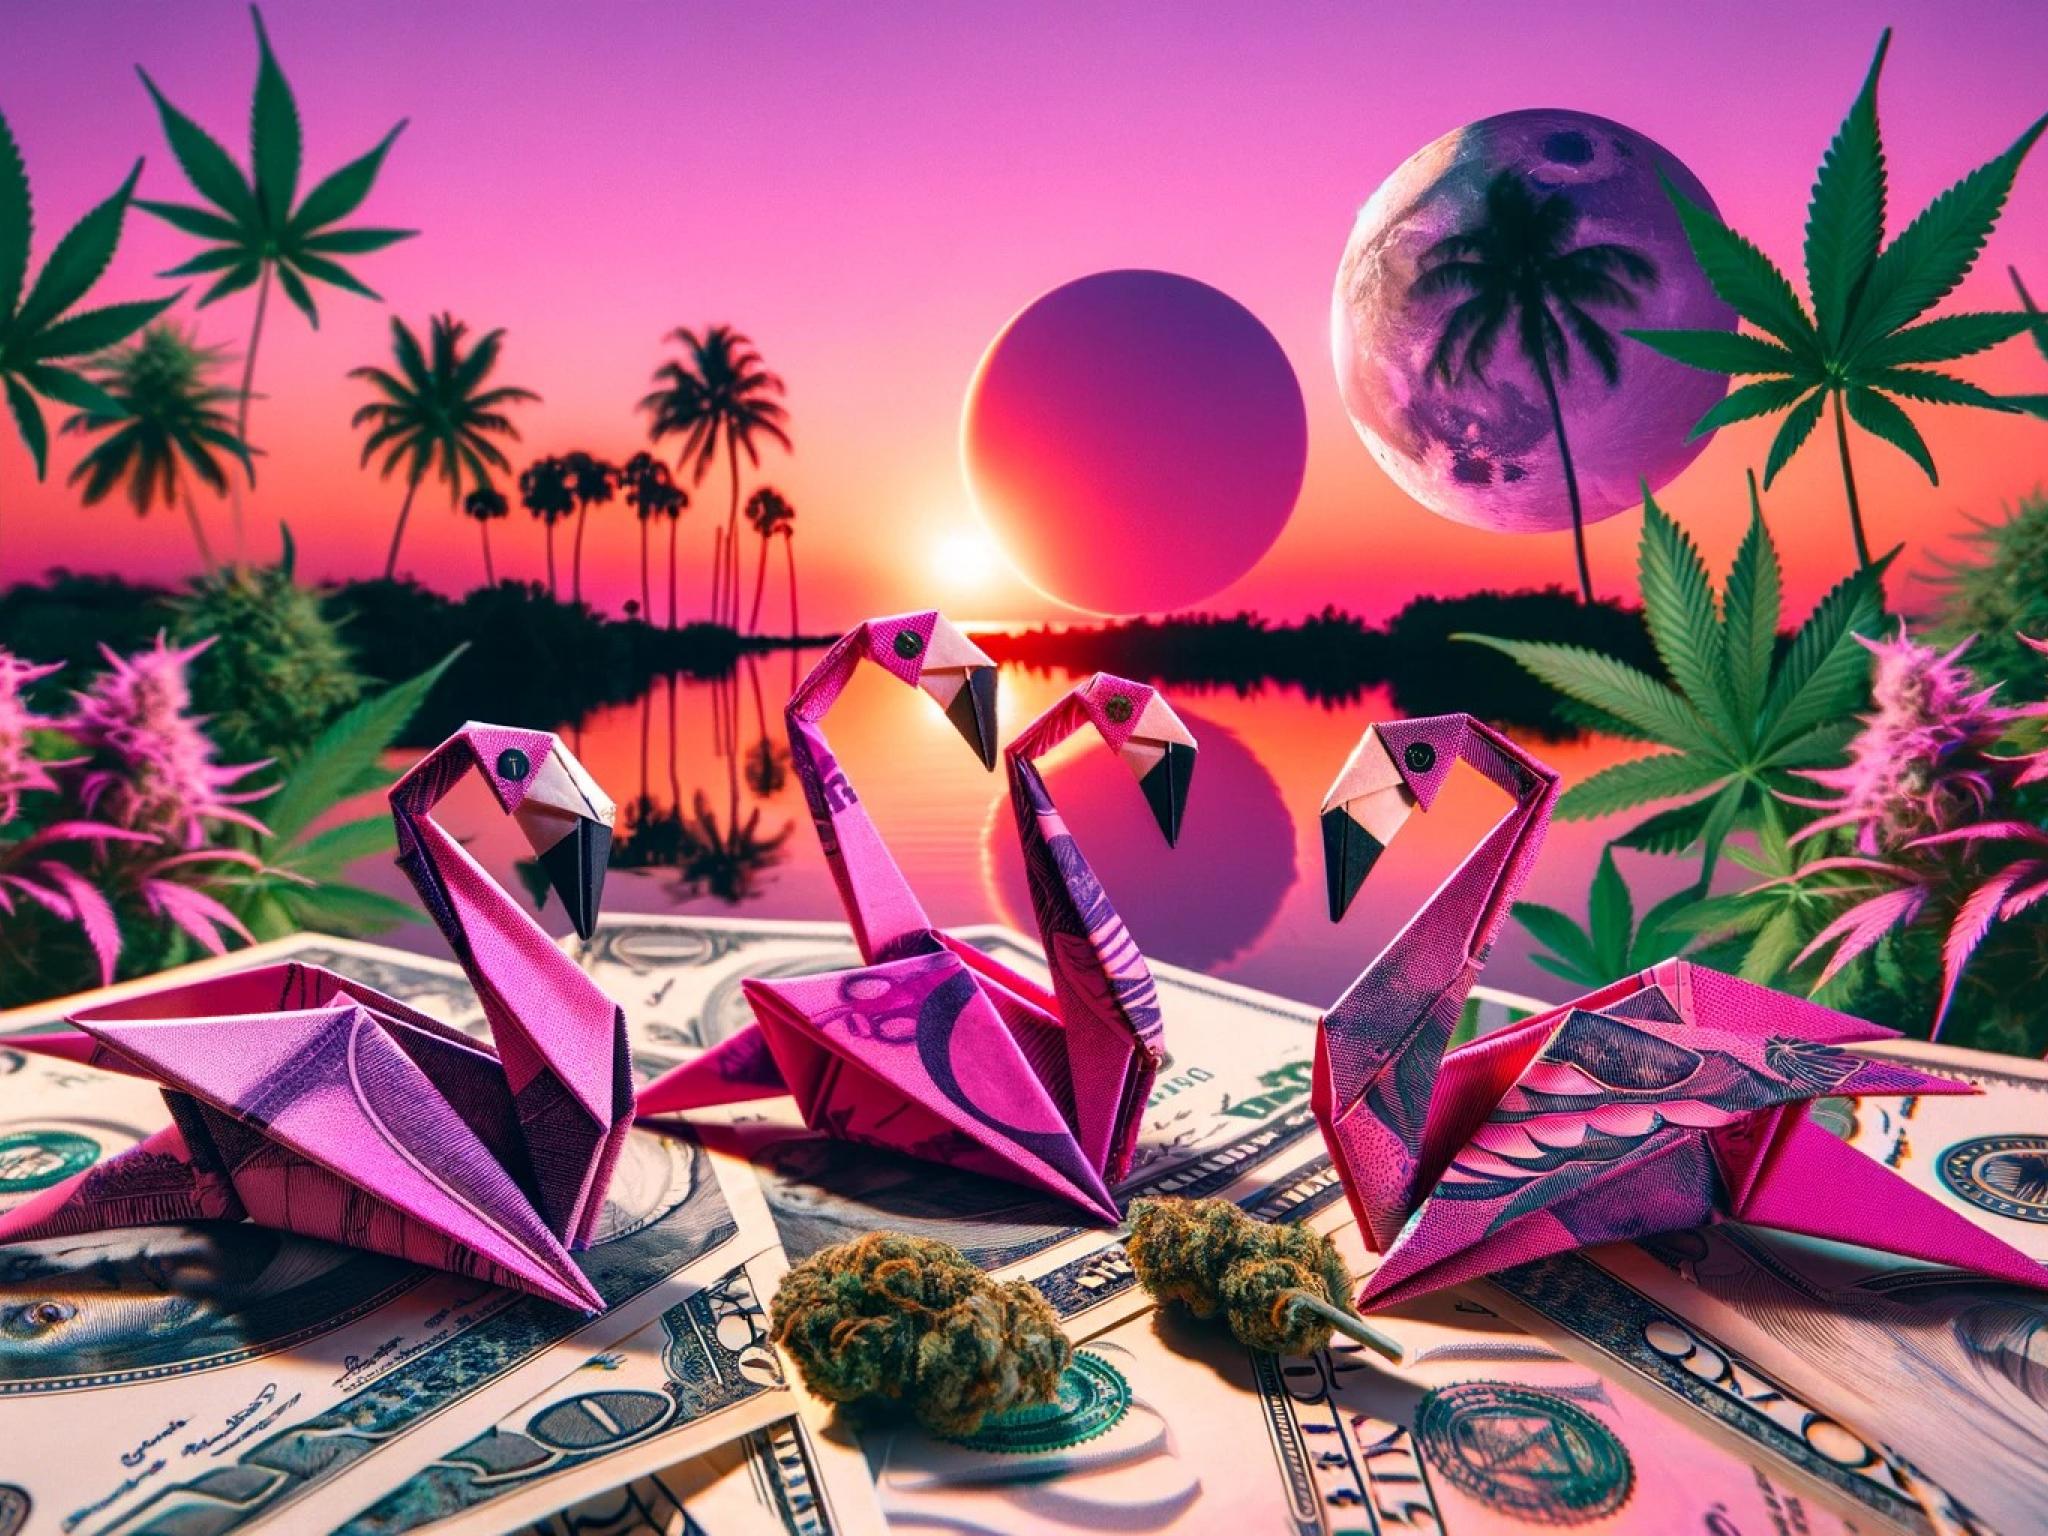  floridas-marijuana-market-could-drive-139-revenue-spike-for-planet-13-fourfold-market-cap-growth 